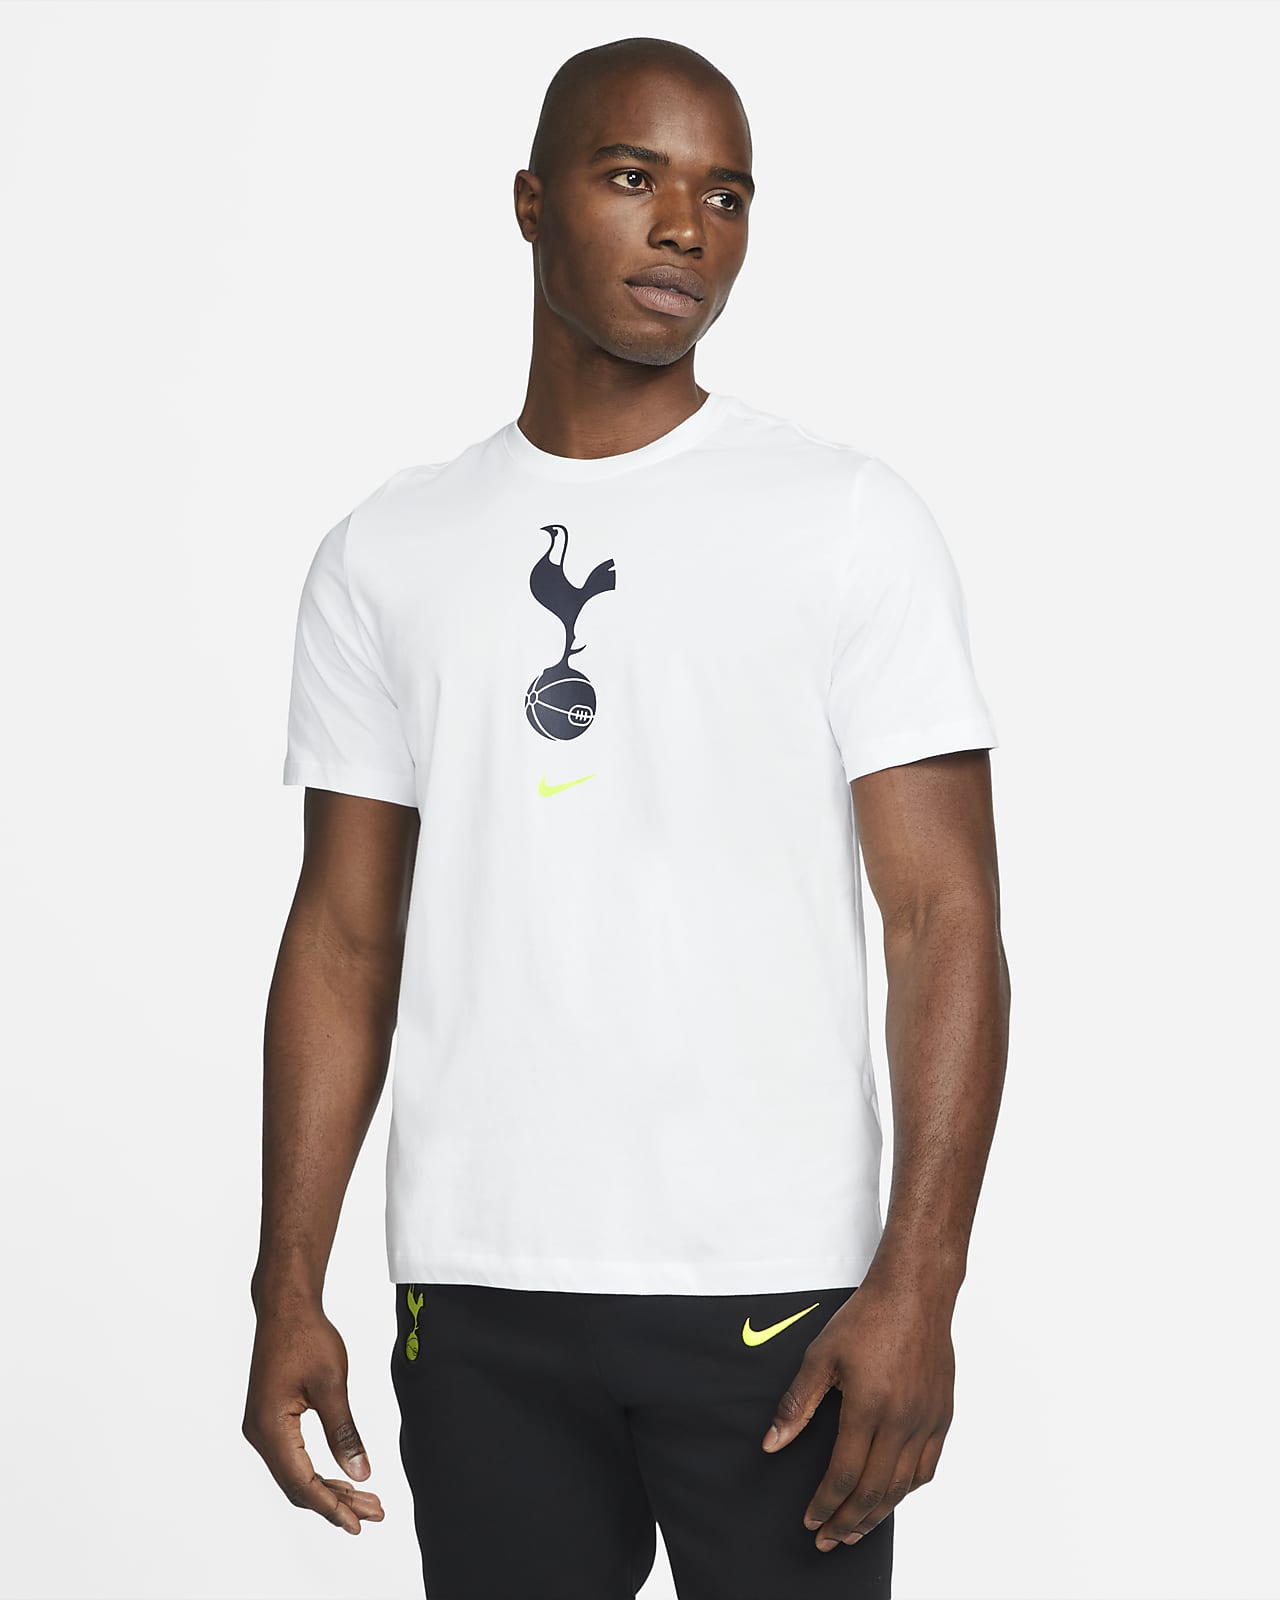 Overvloed woestenij Terzijde Tottenham Hotspur Crest Men's Soccer T-Shirt. Nike.com